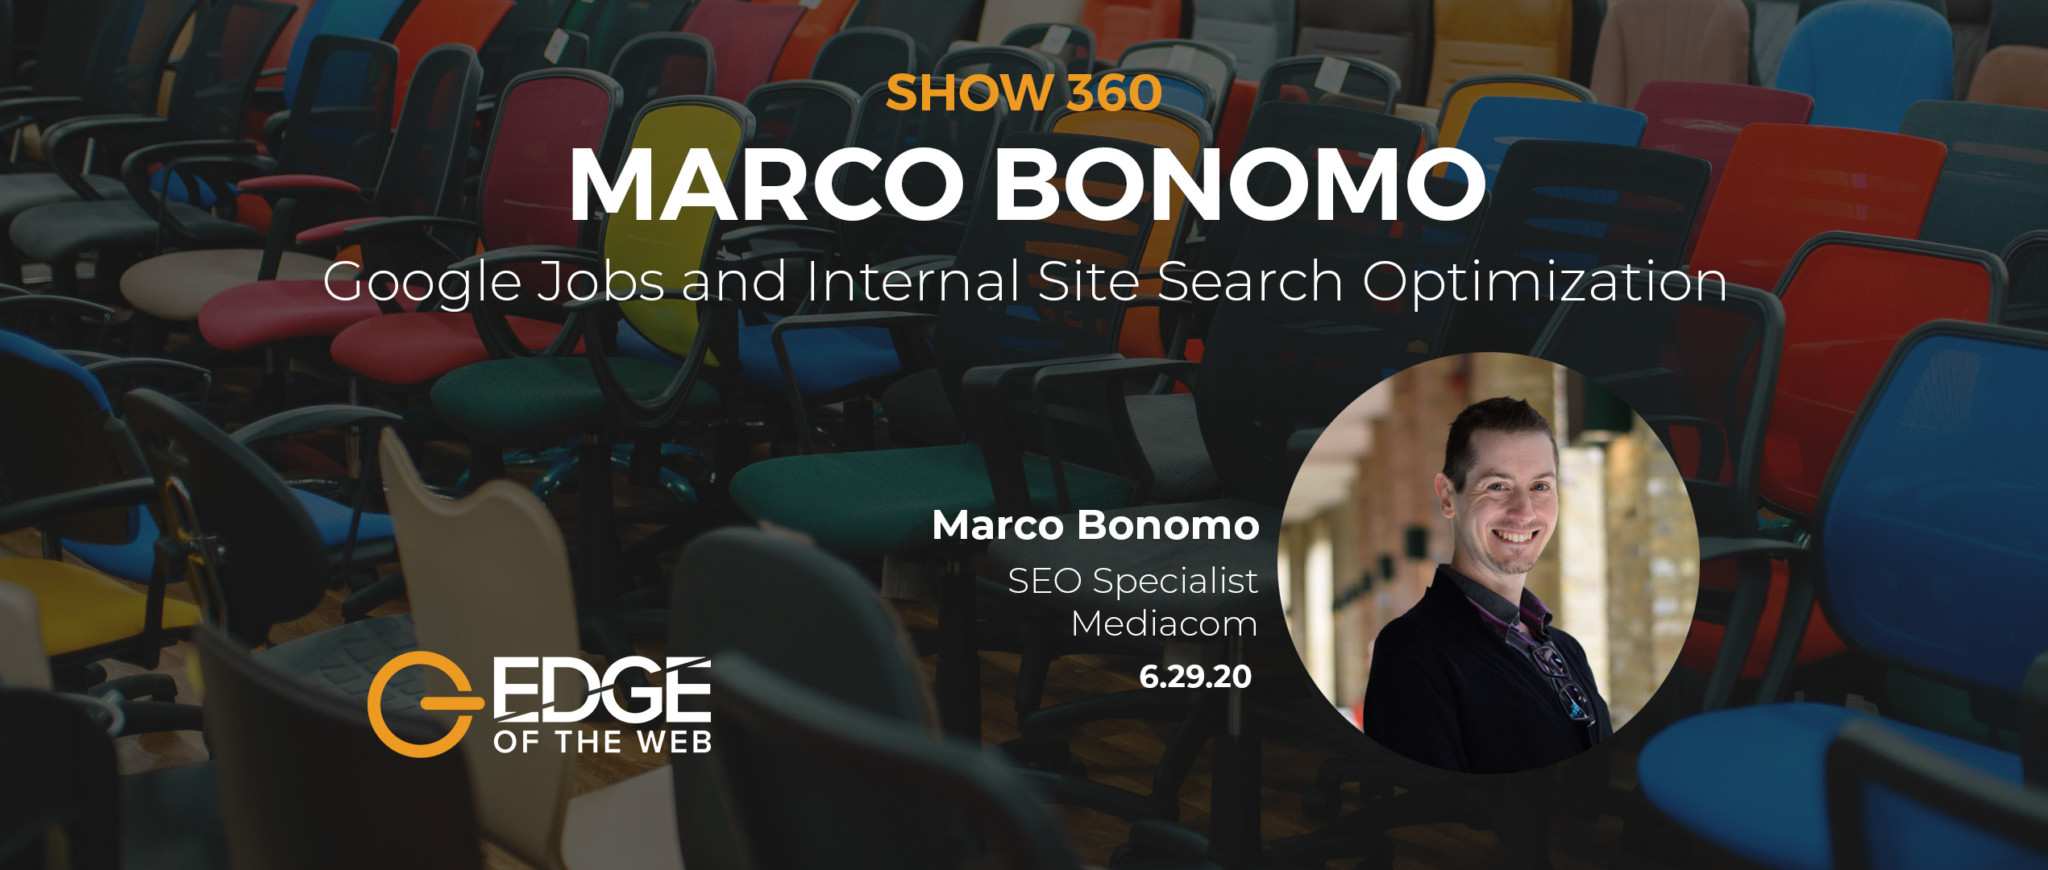 Marco Bonomo EDGE EP360 Featured Image